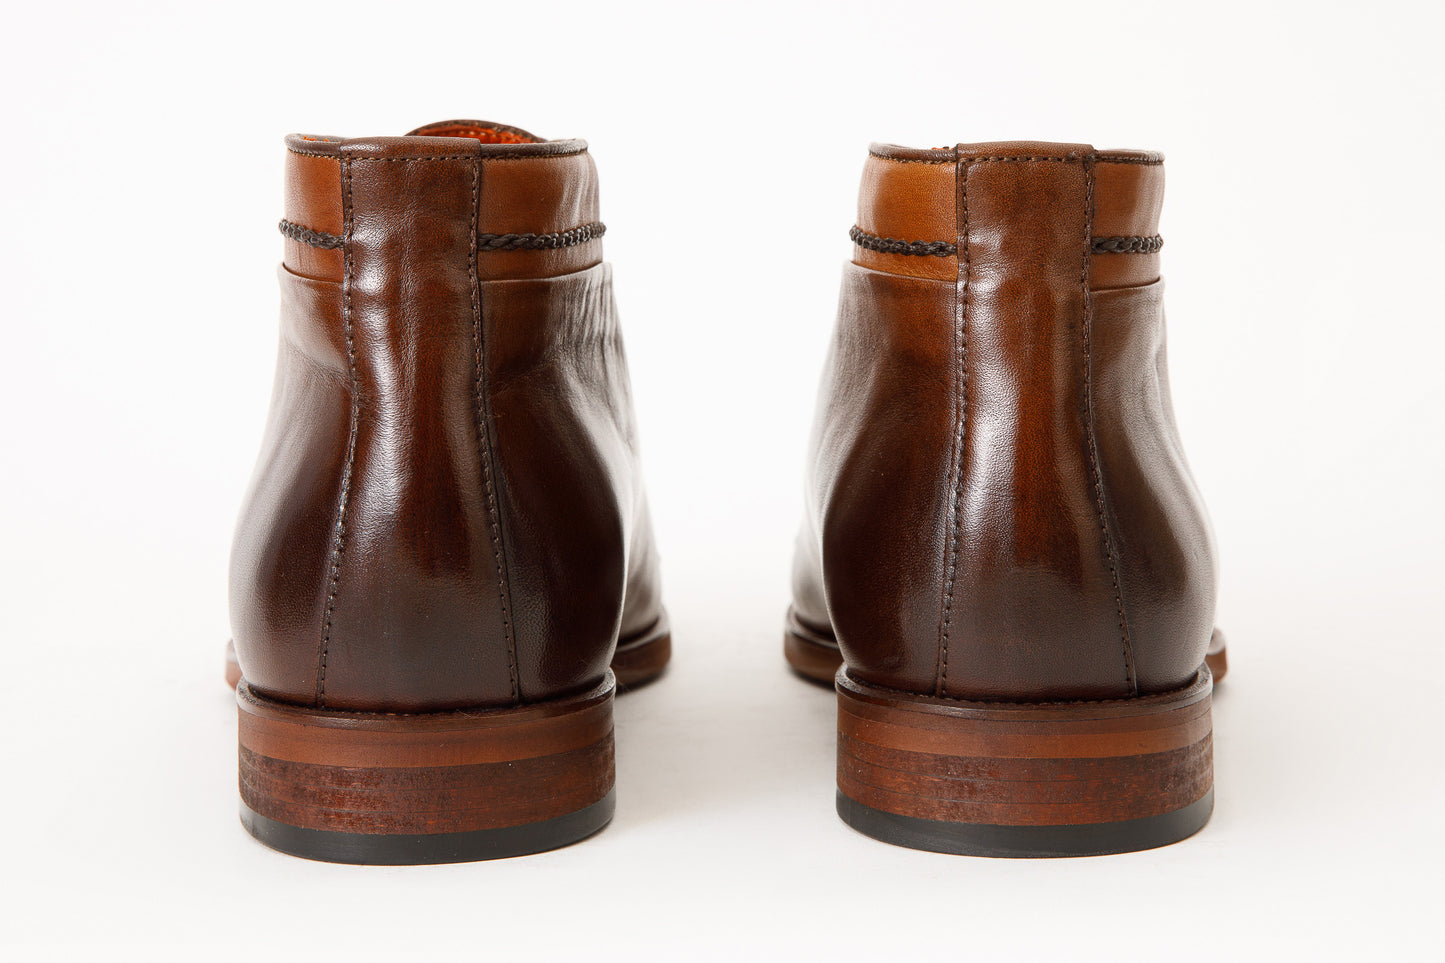 The Rome Tan Leather Oxford Cap-Toe Men Boot